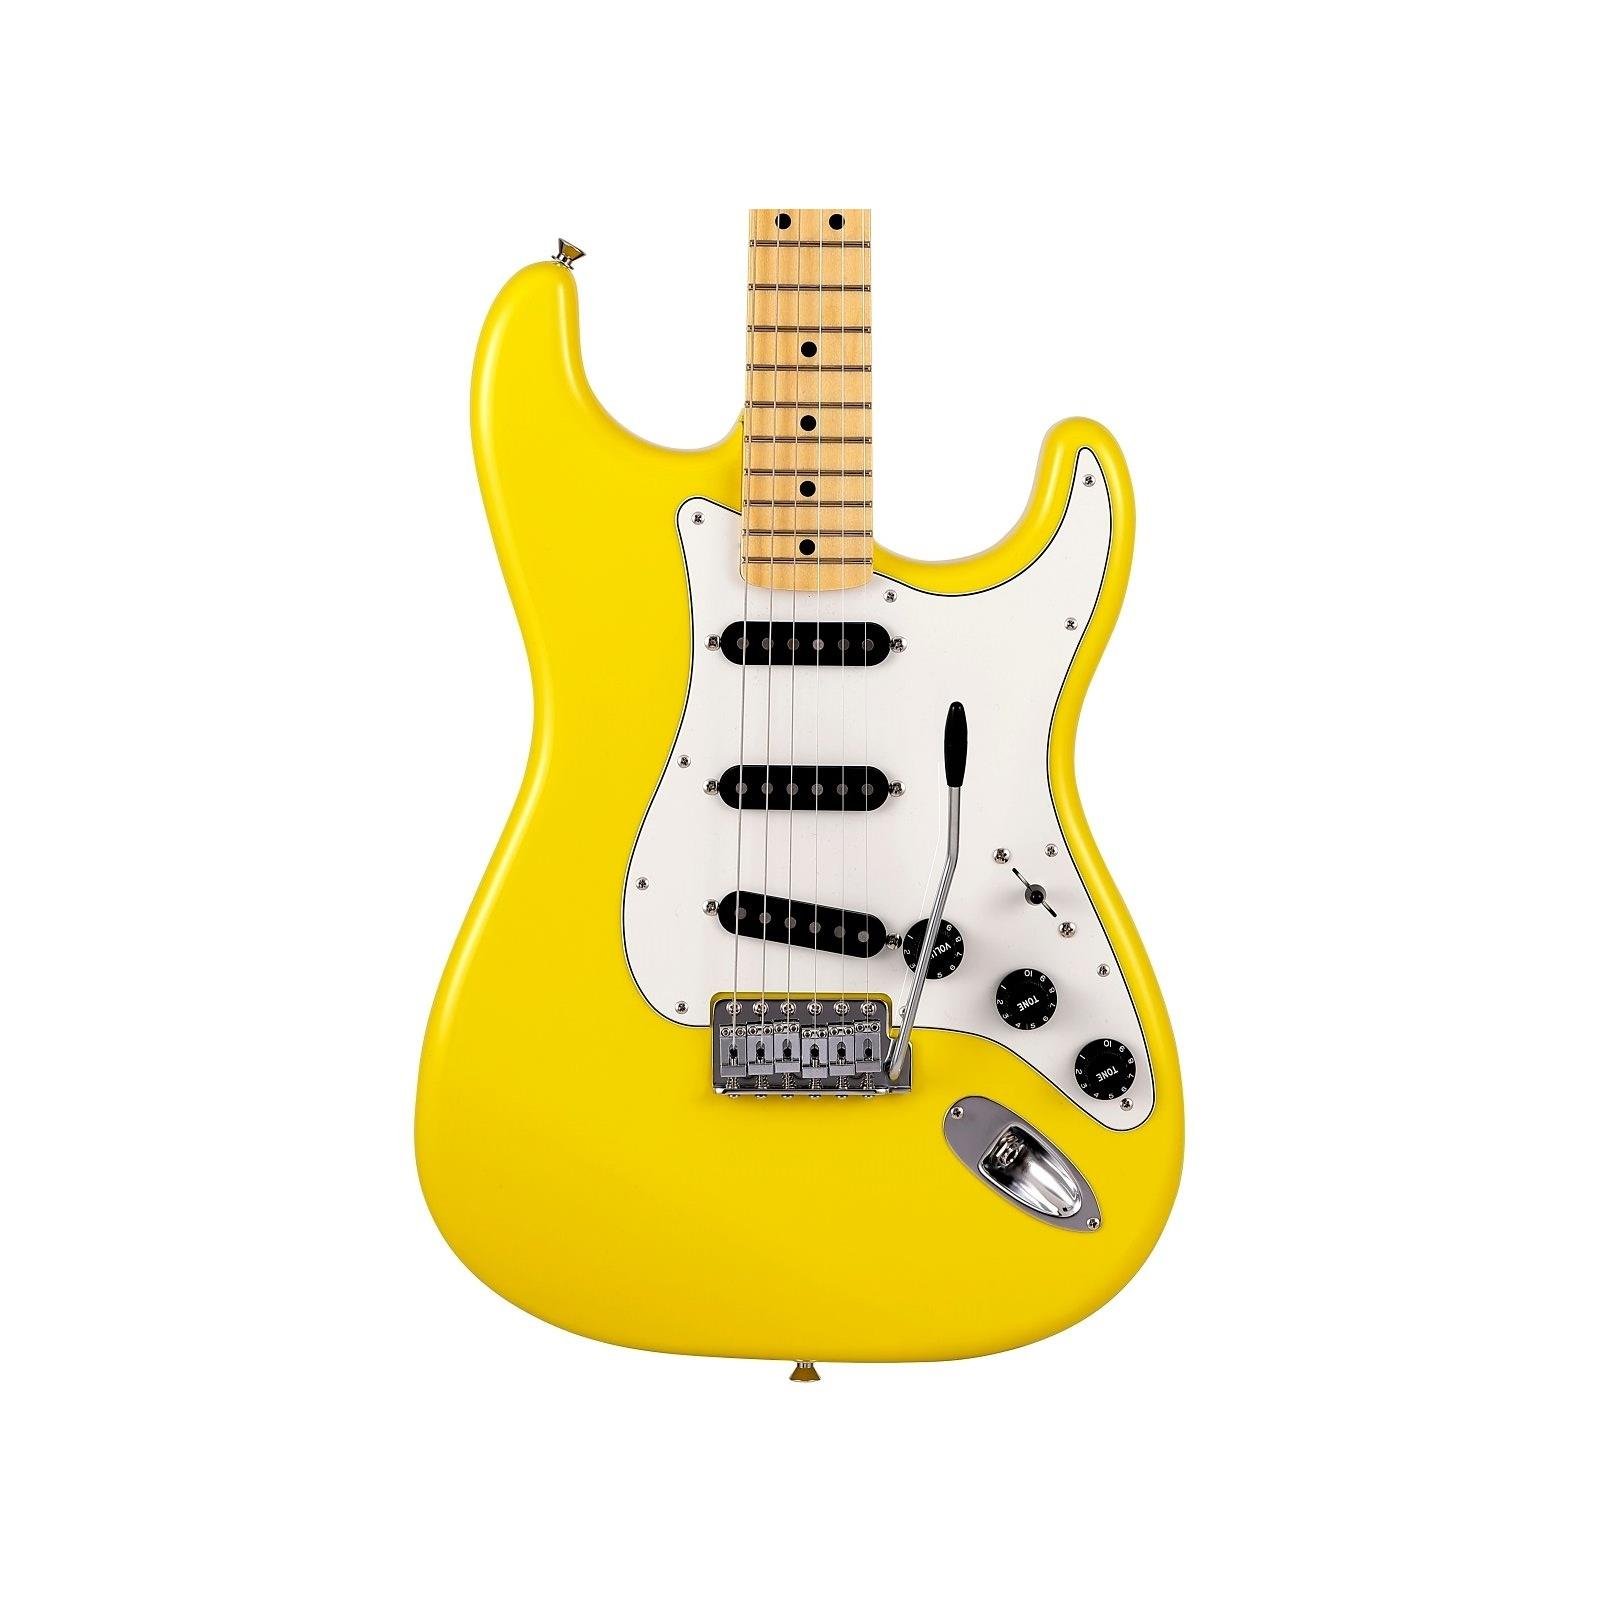 Fender Limited MIJ International Color Statocastrer Monaco Yellow